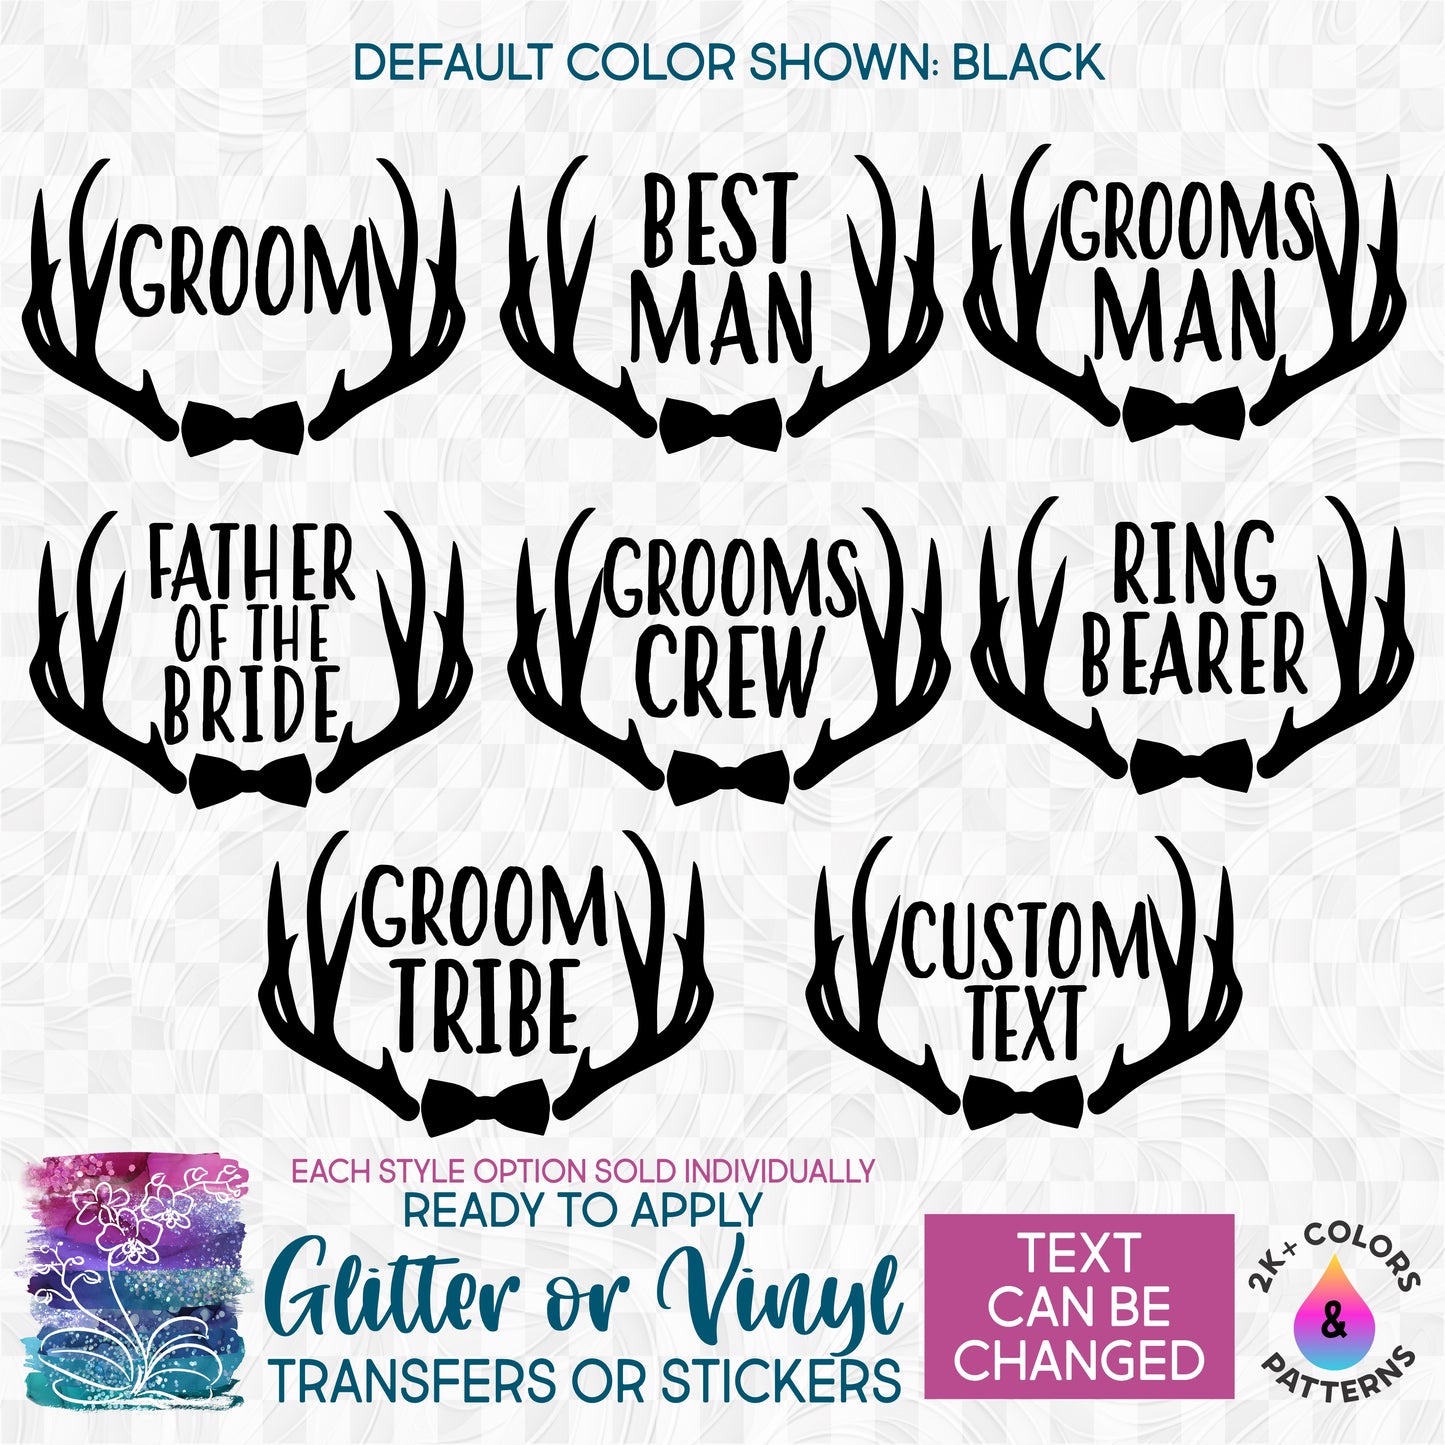 s81-27 Deer Antlers Bow Tie Groom Best Man Groomsman Father of the Bride Custom Printed Iron On Transfer or Sticker